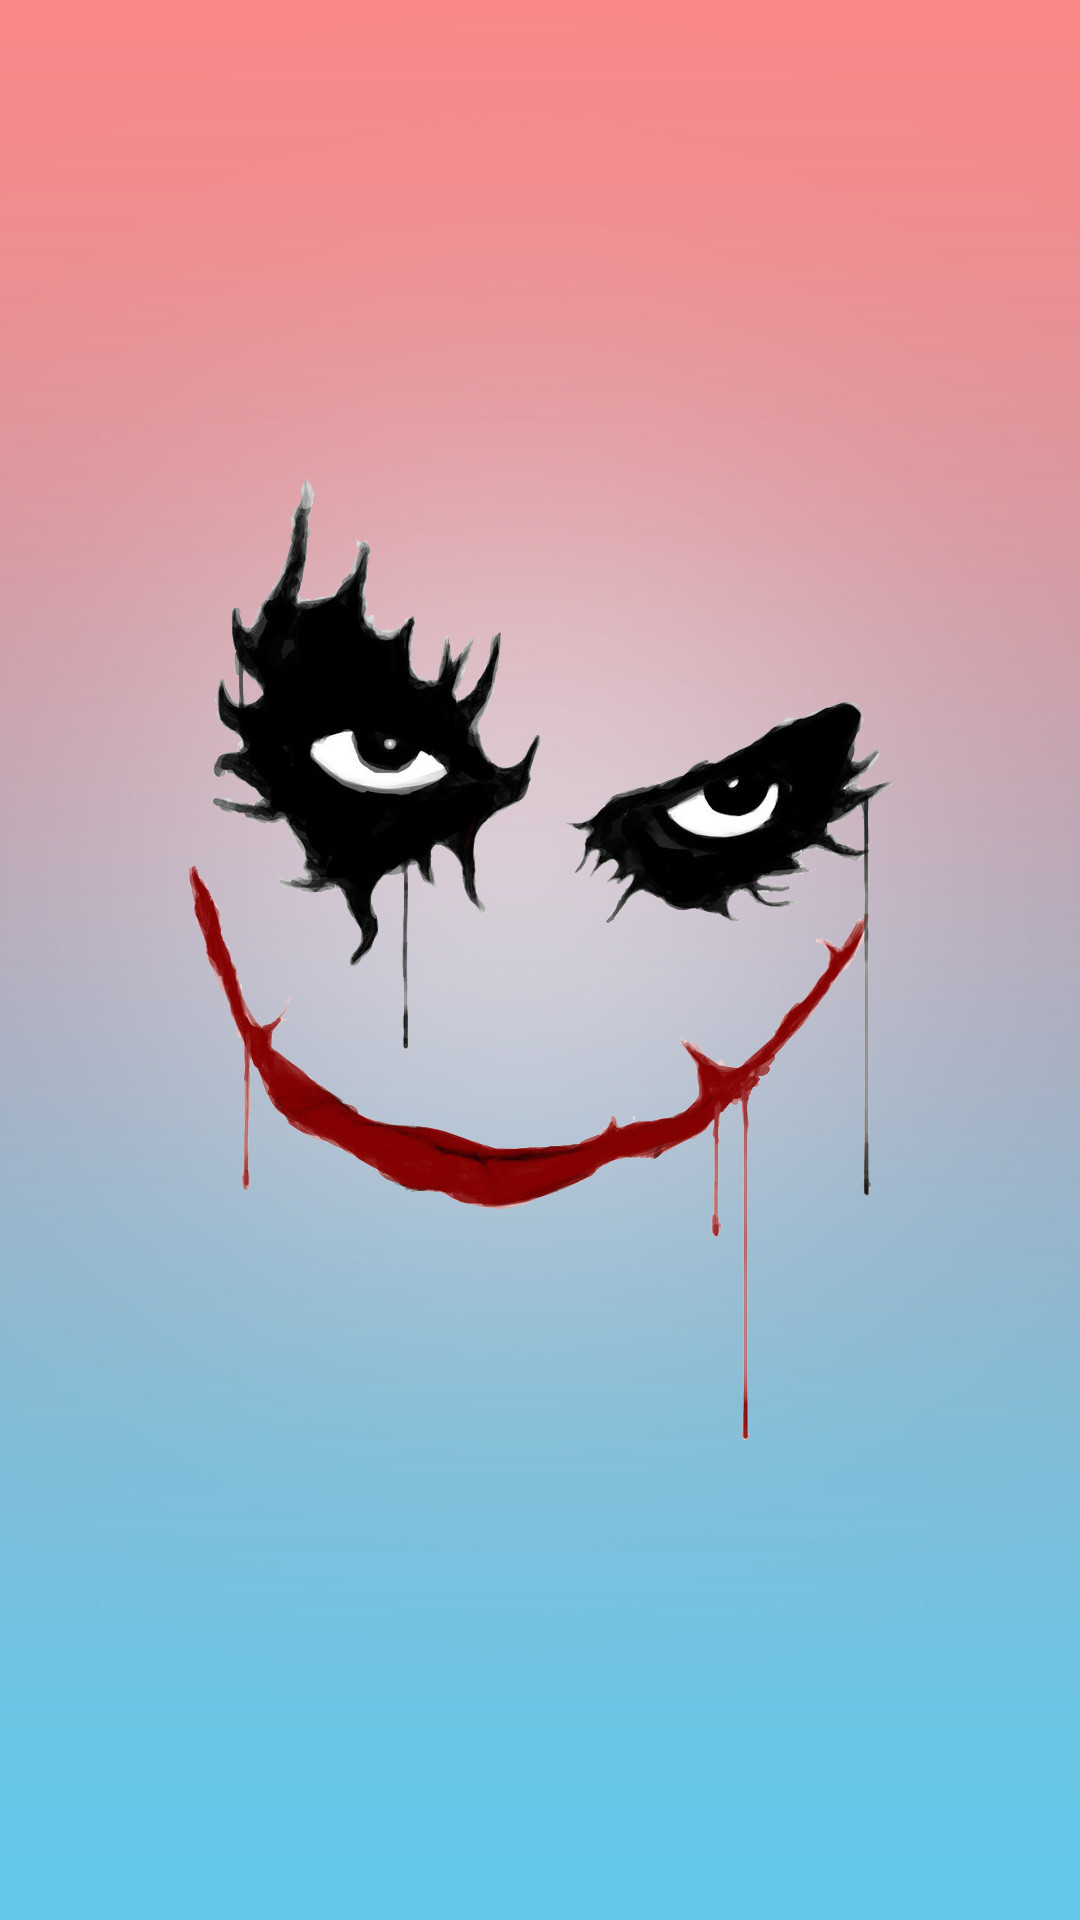 1080x1920 Joker Wallpaper iPhone 6S Plus by DeviantSith17 on DeviantArt